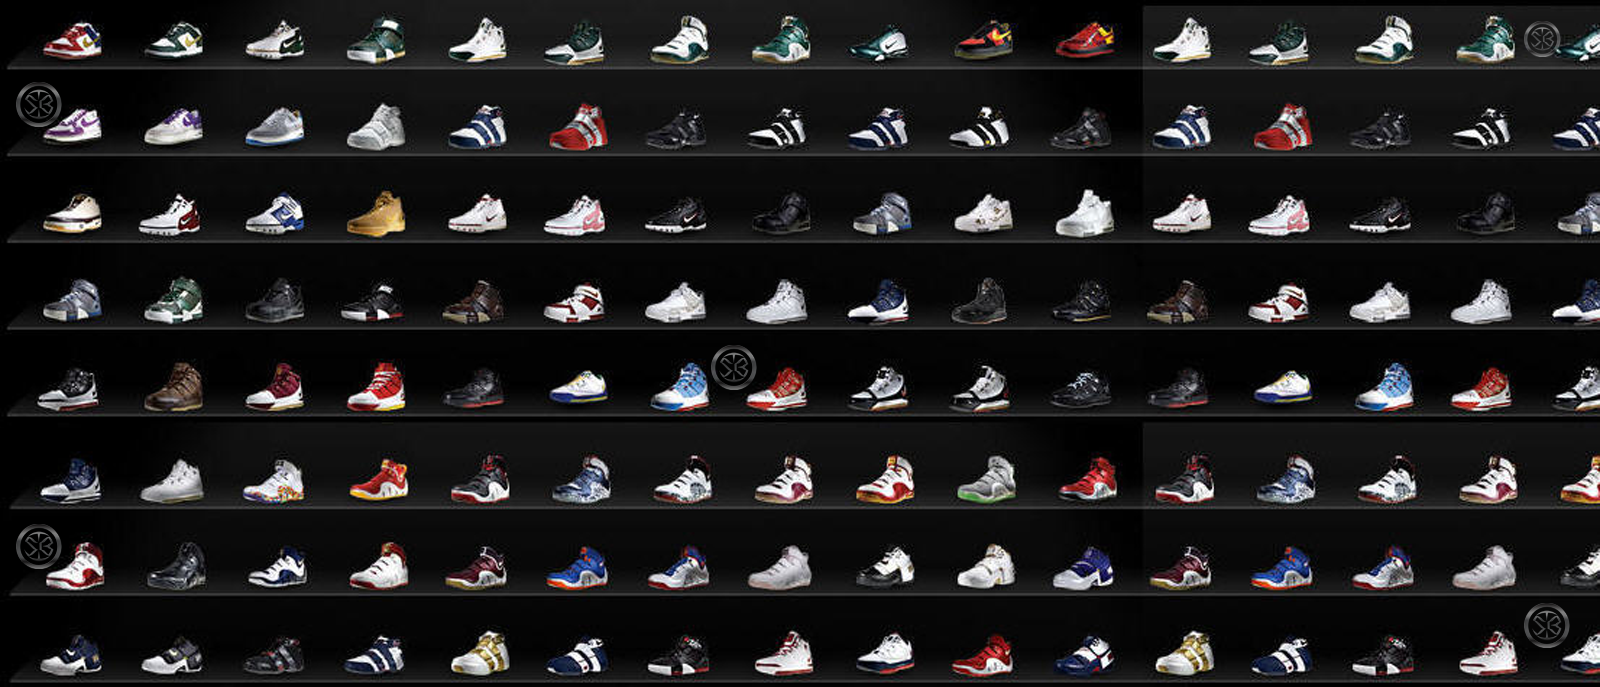 Jordan Shoes Backgrounds